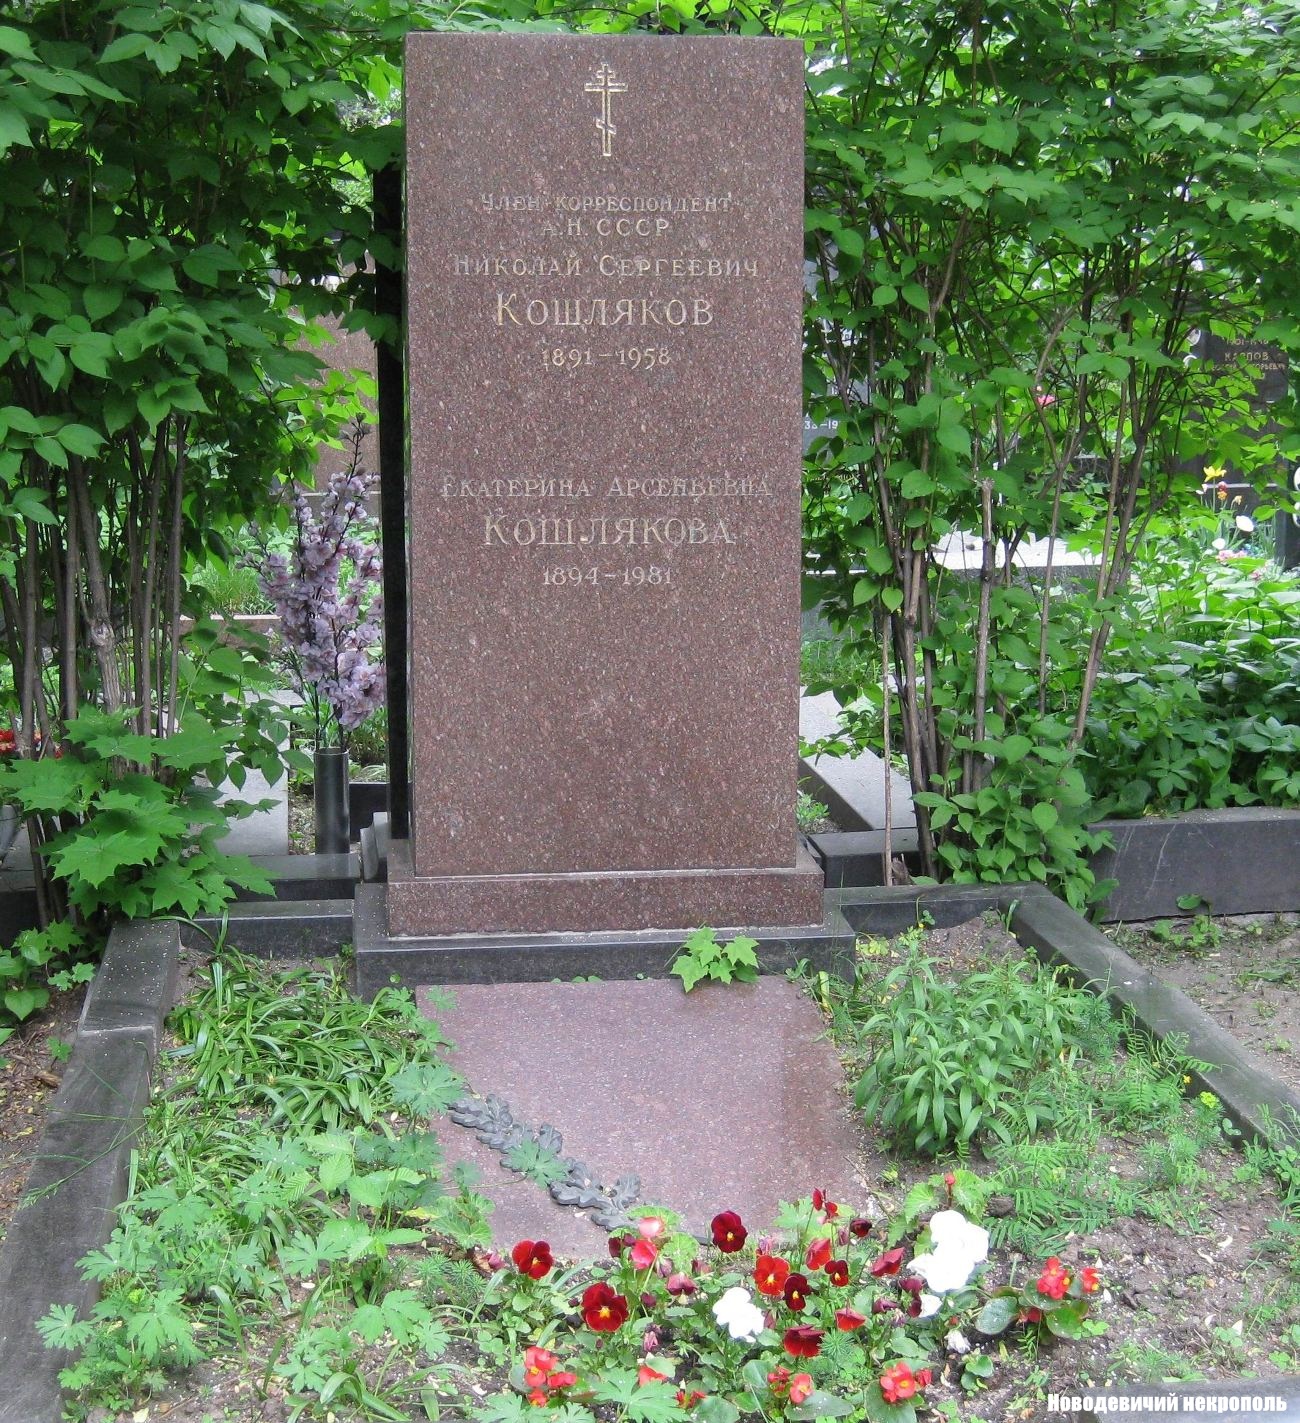 Памятник на могиле Кошлякова Н.С. (1891-1958), на Новодевичьем кладбище (5-26-7).